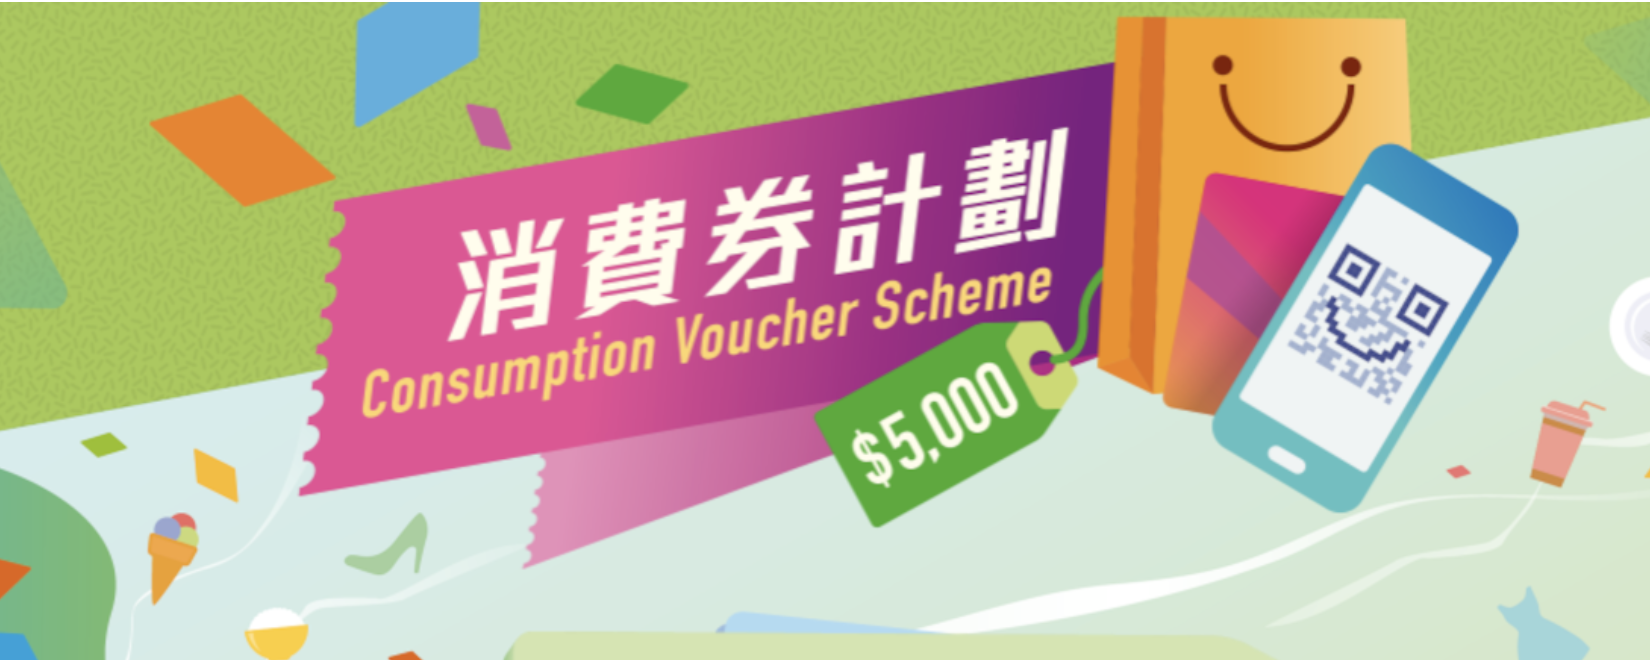 Hong Kong Residents to Spend “A Third” of Consumption Voucher Money at Restaurants